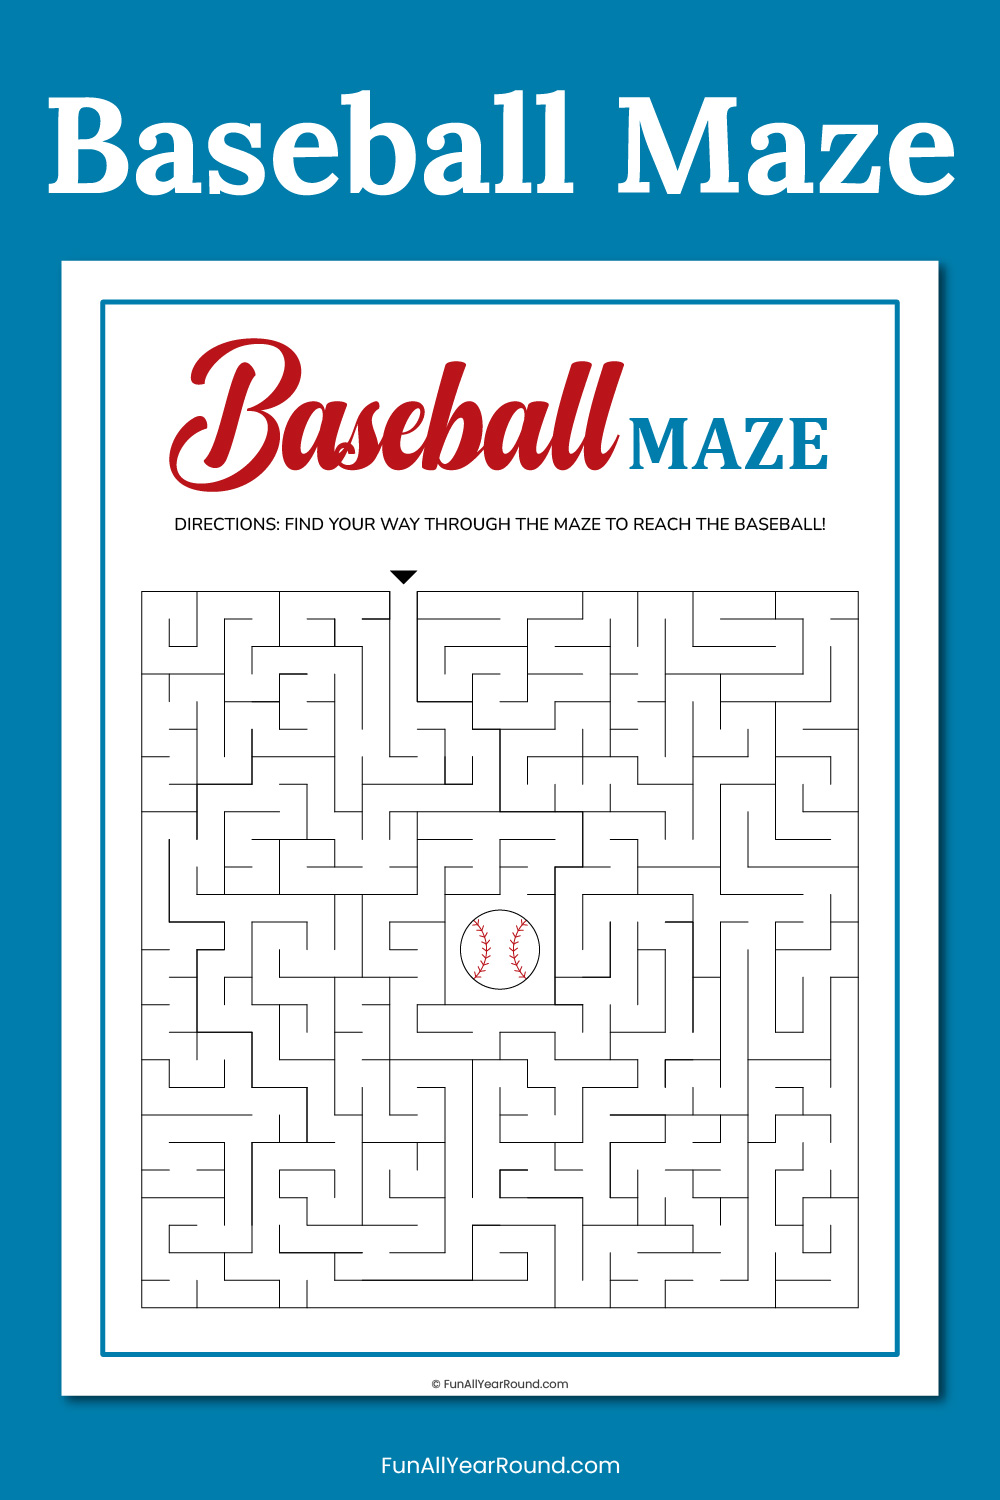 Baseball maze